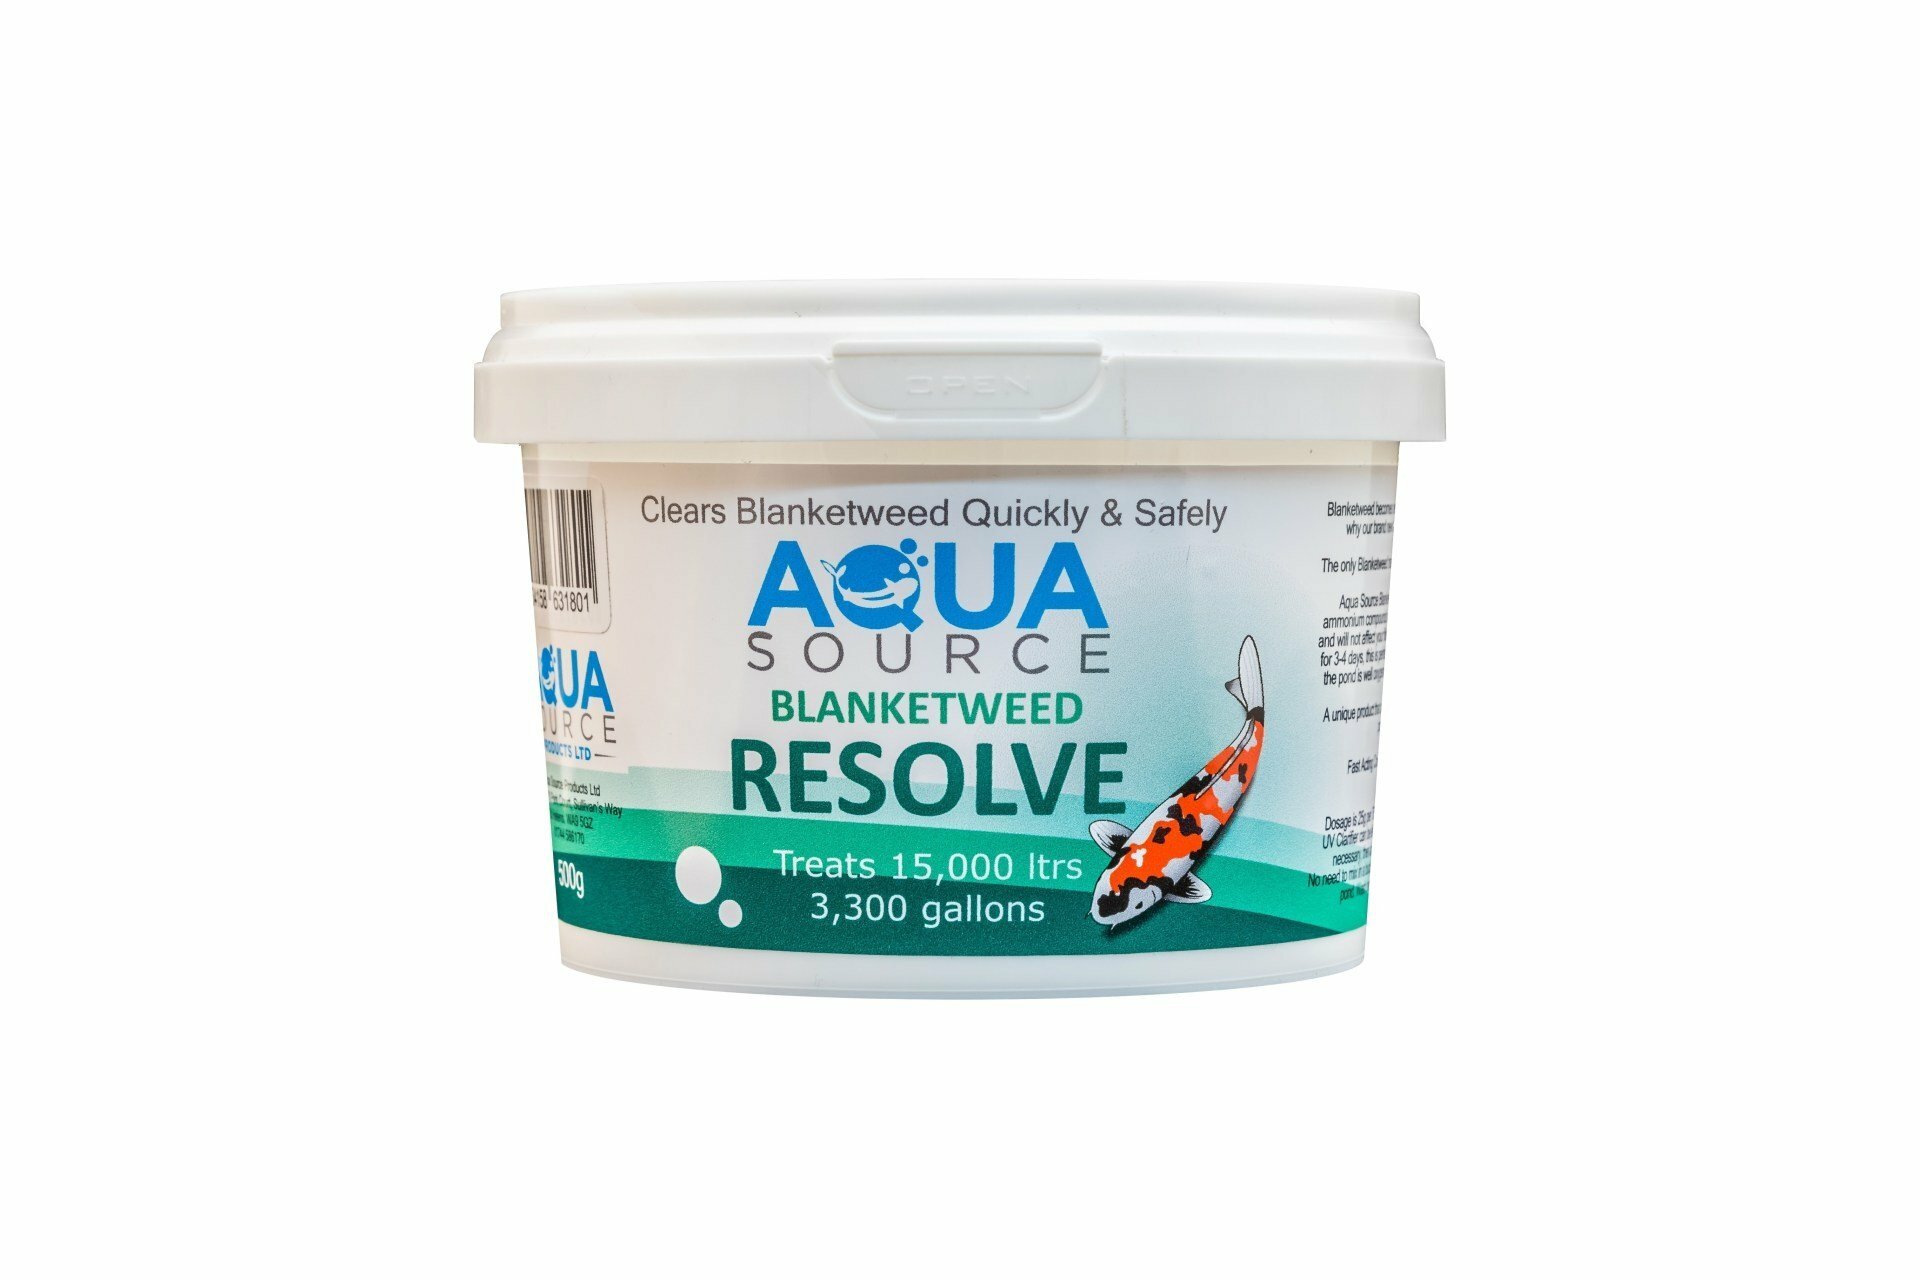 Aqua Source Blanketweed Resolve 1 kG